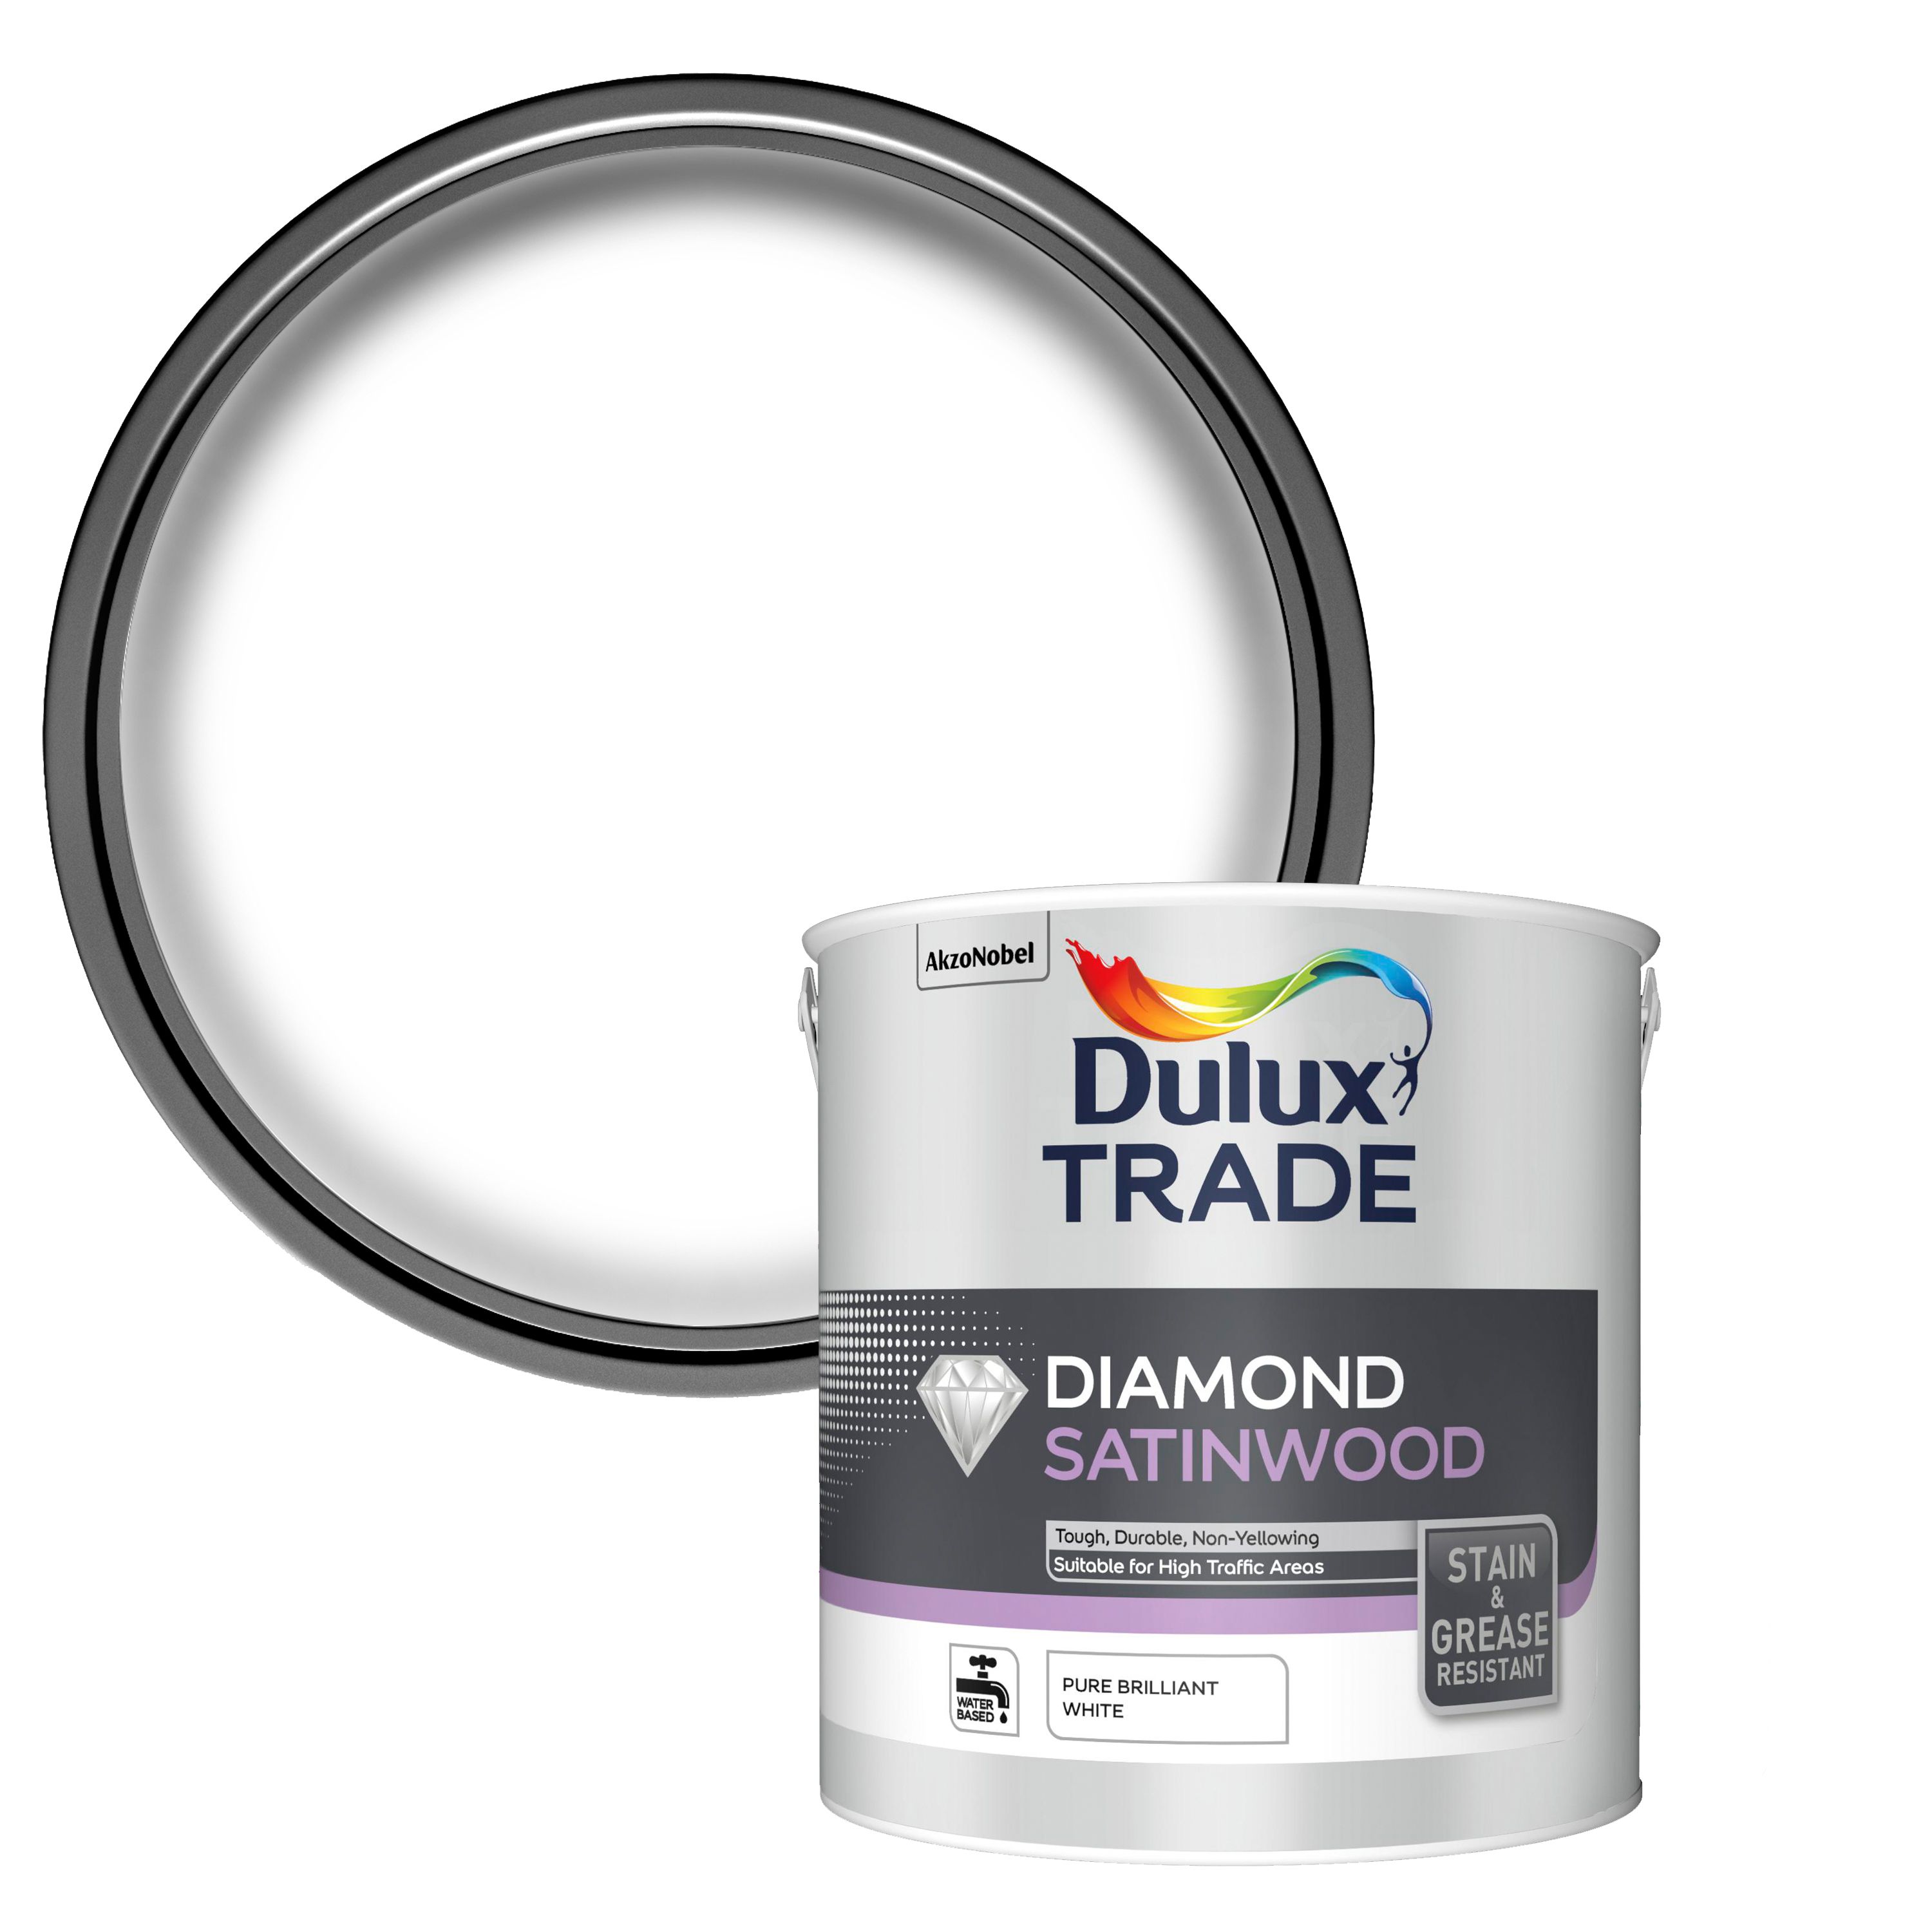  Dulux  Trade Diamond  Pure brilliant white Satinwood paint  2 